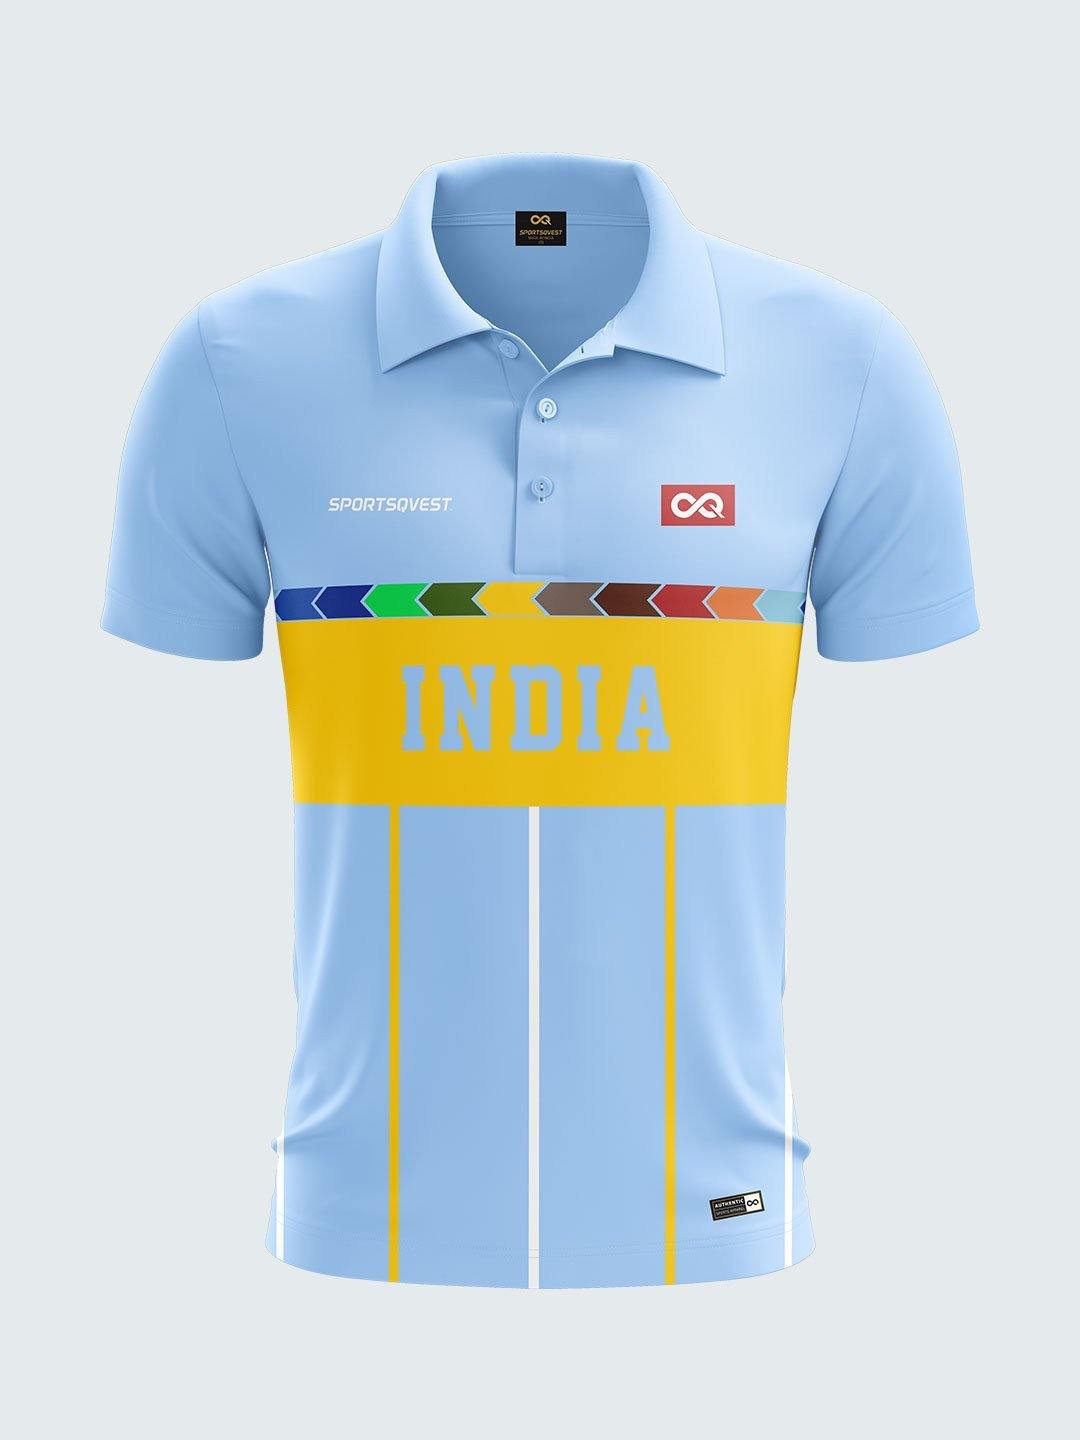 buy india cricket jersey